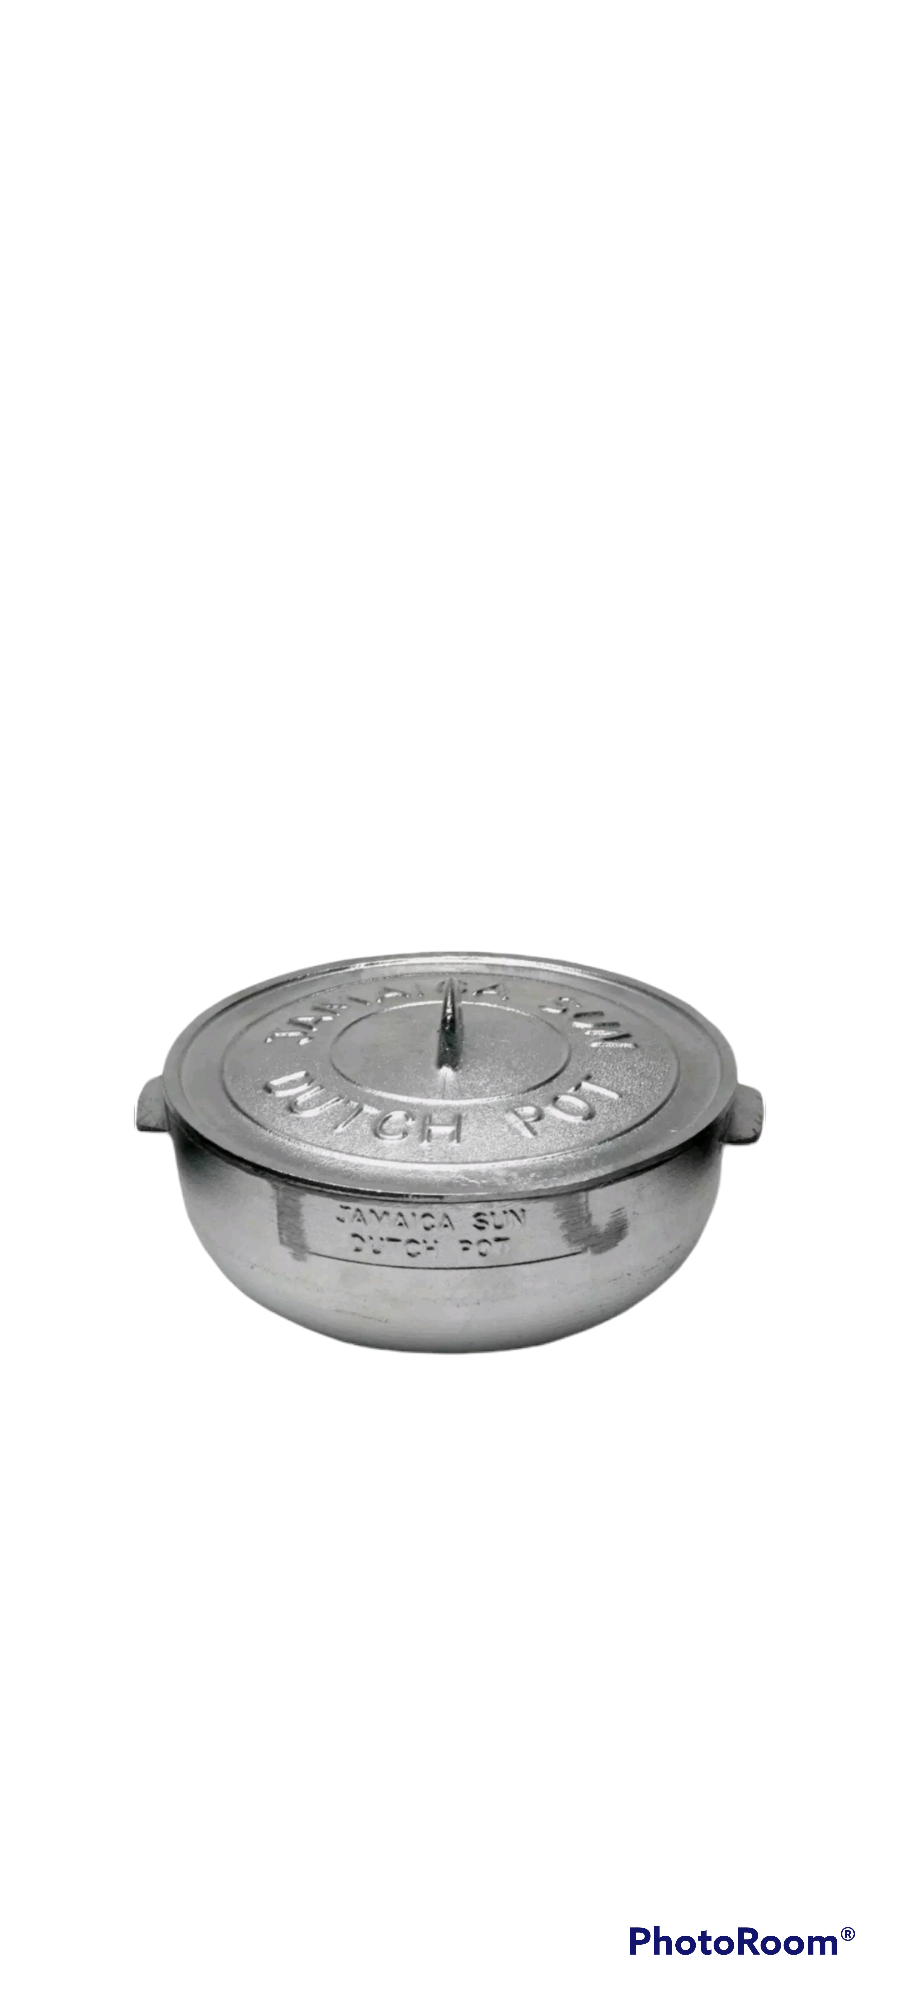  New Jamaican Caribbean Dutch Pots Casserole Oven Heavy Duty  Dutchie - Diameter: 22 cm : לבית ולמטבח